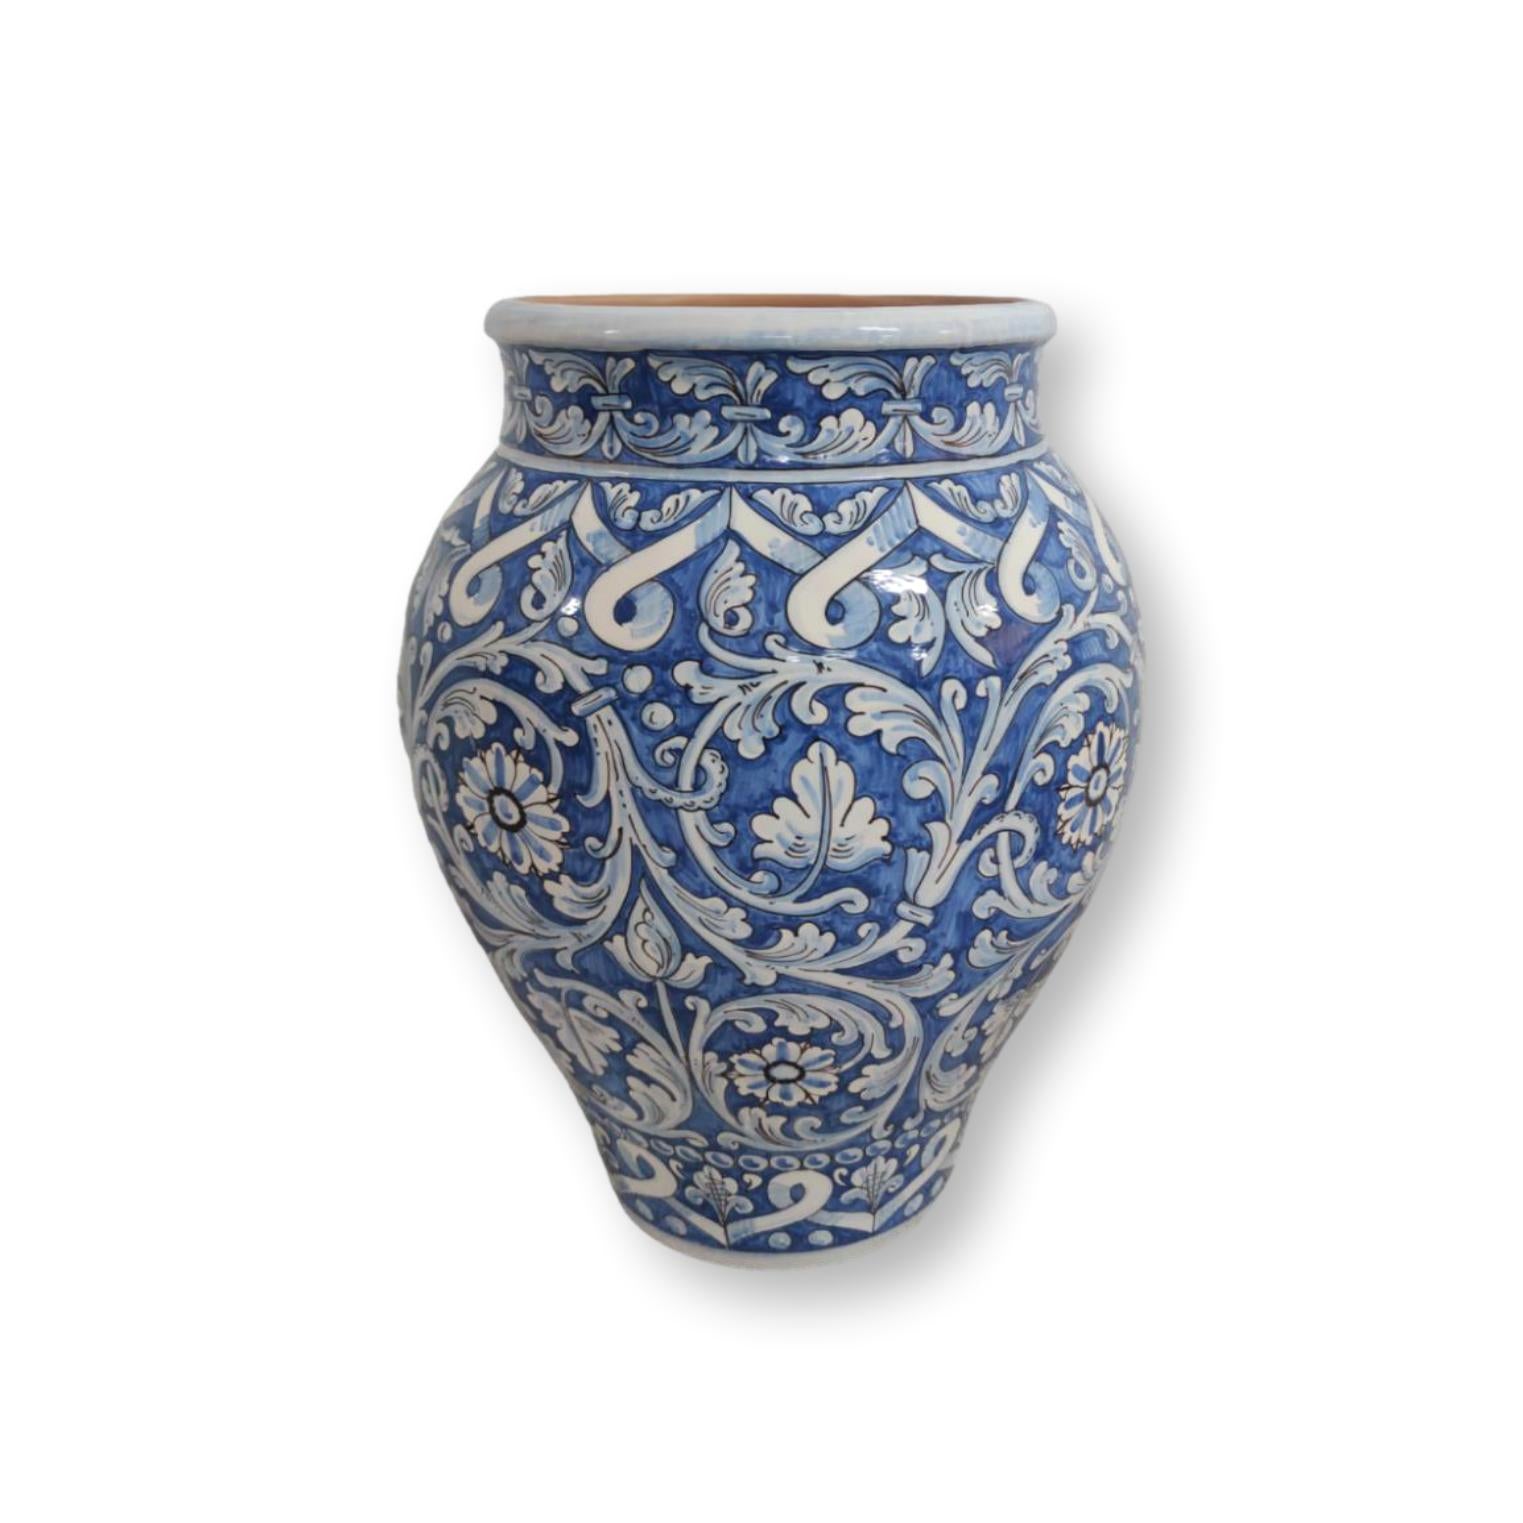 Giara in ceramica dipinta a mano - Ornata Azzurro e Bianco